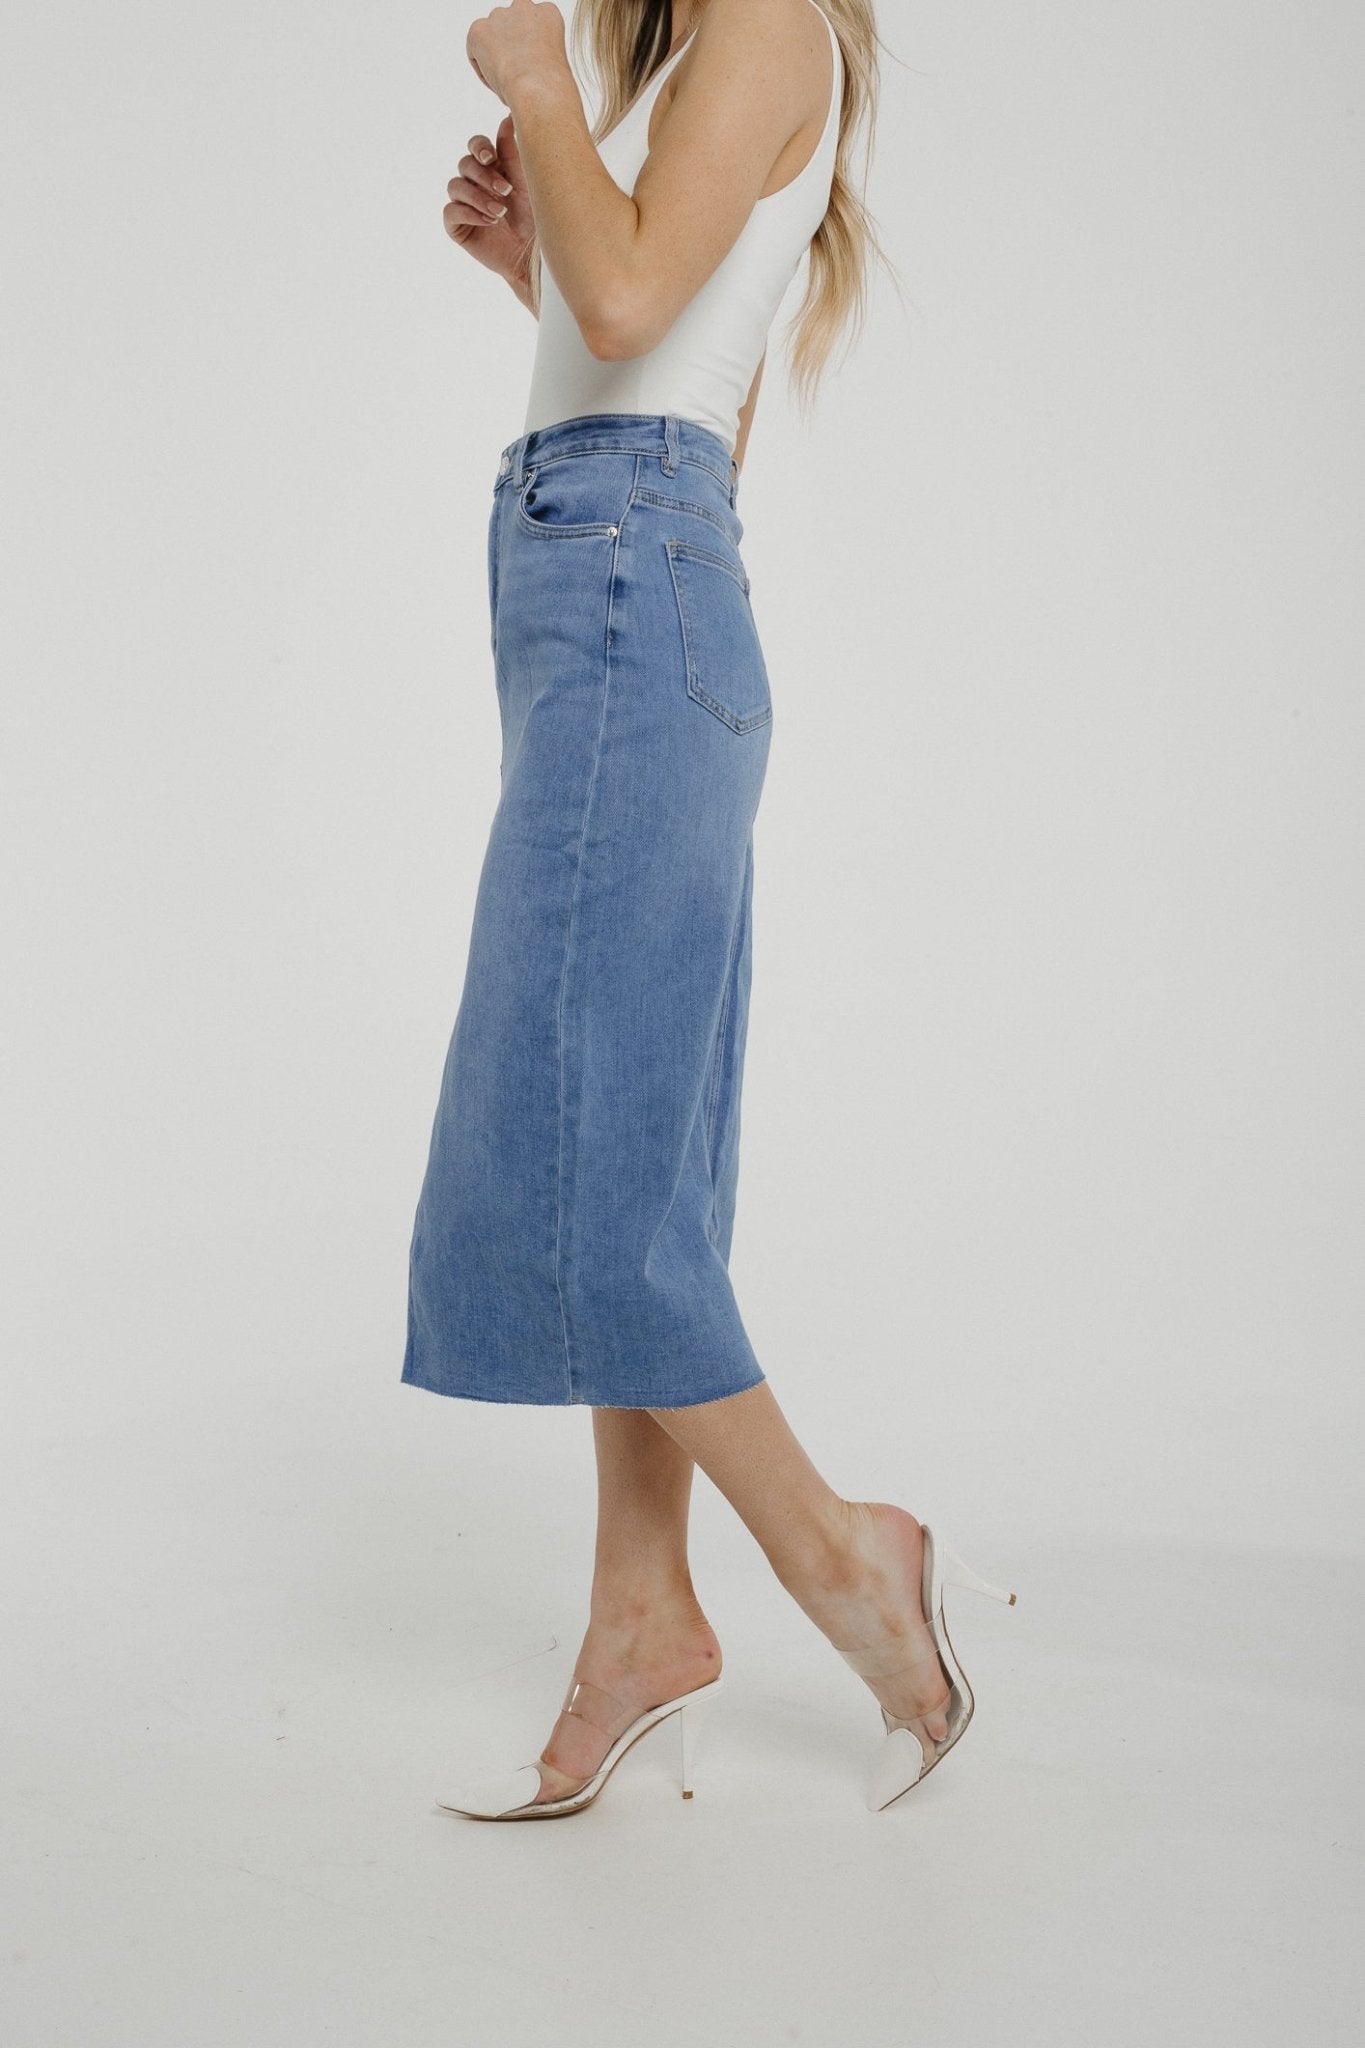 Freya Denim Midi Skirt In Light Wash - The Walk in Wardrobe